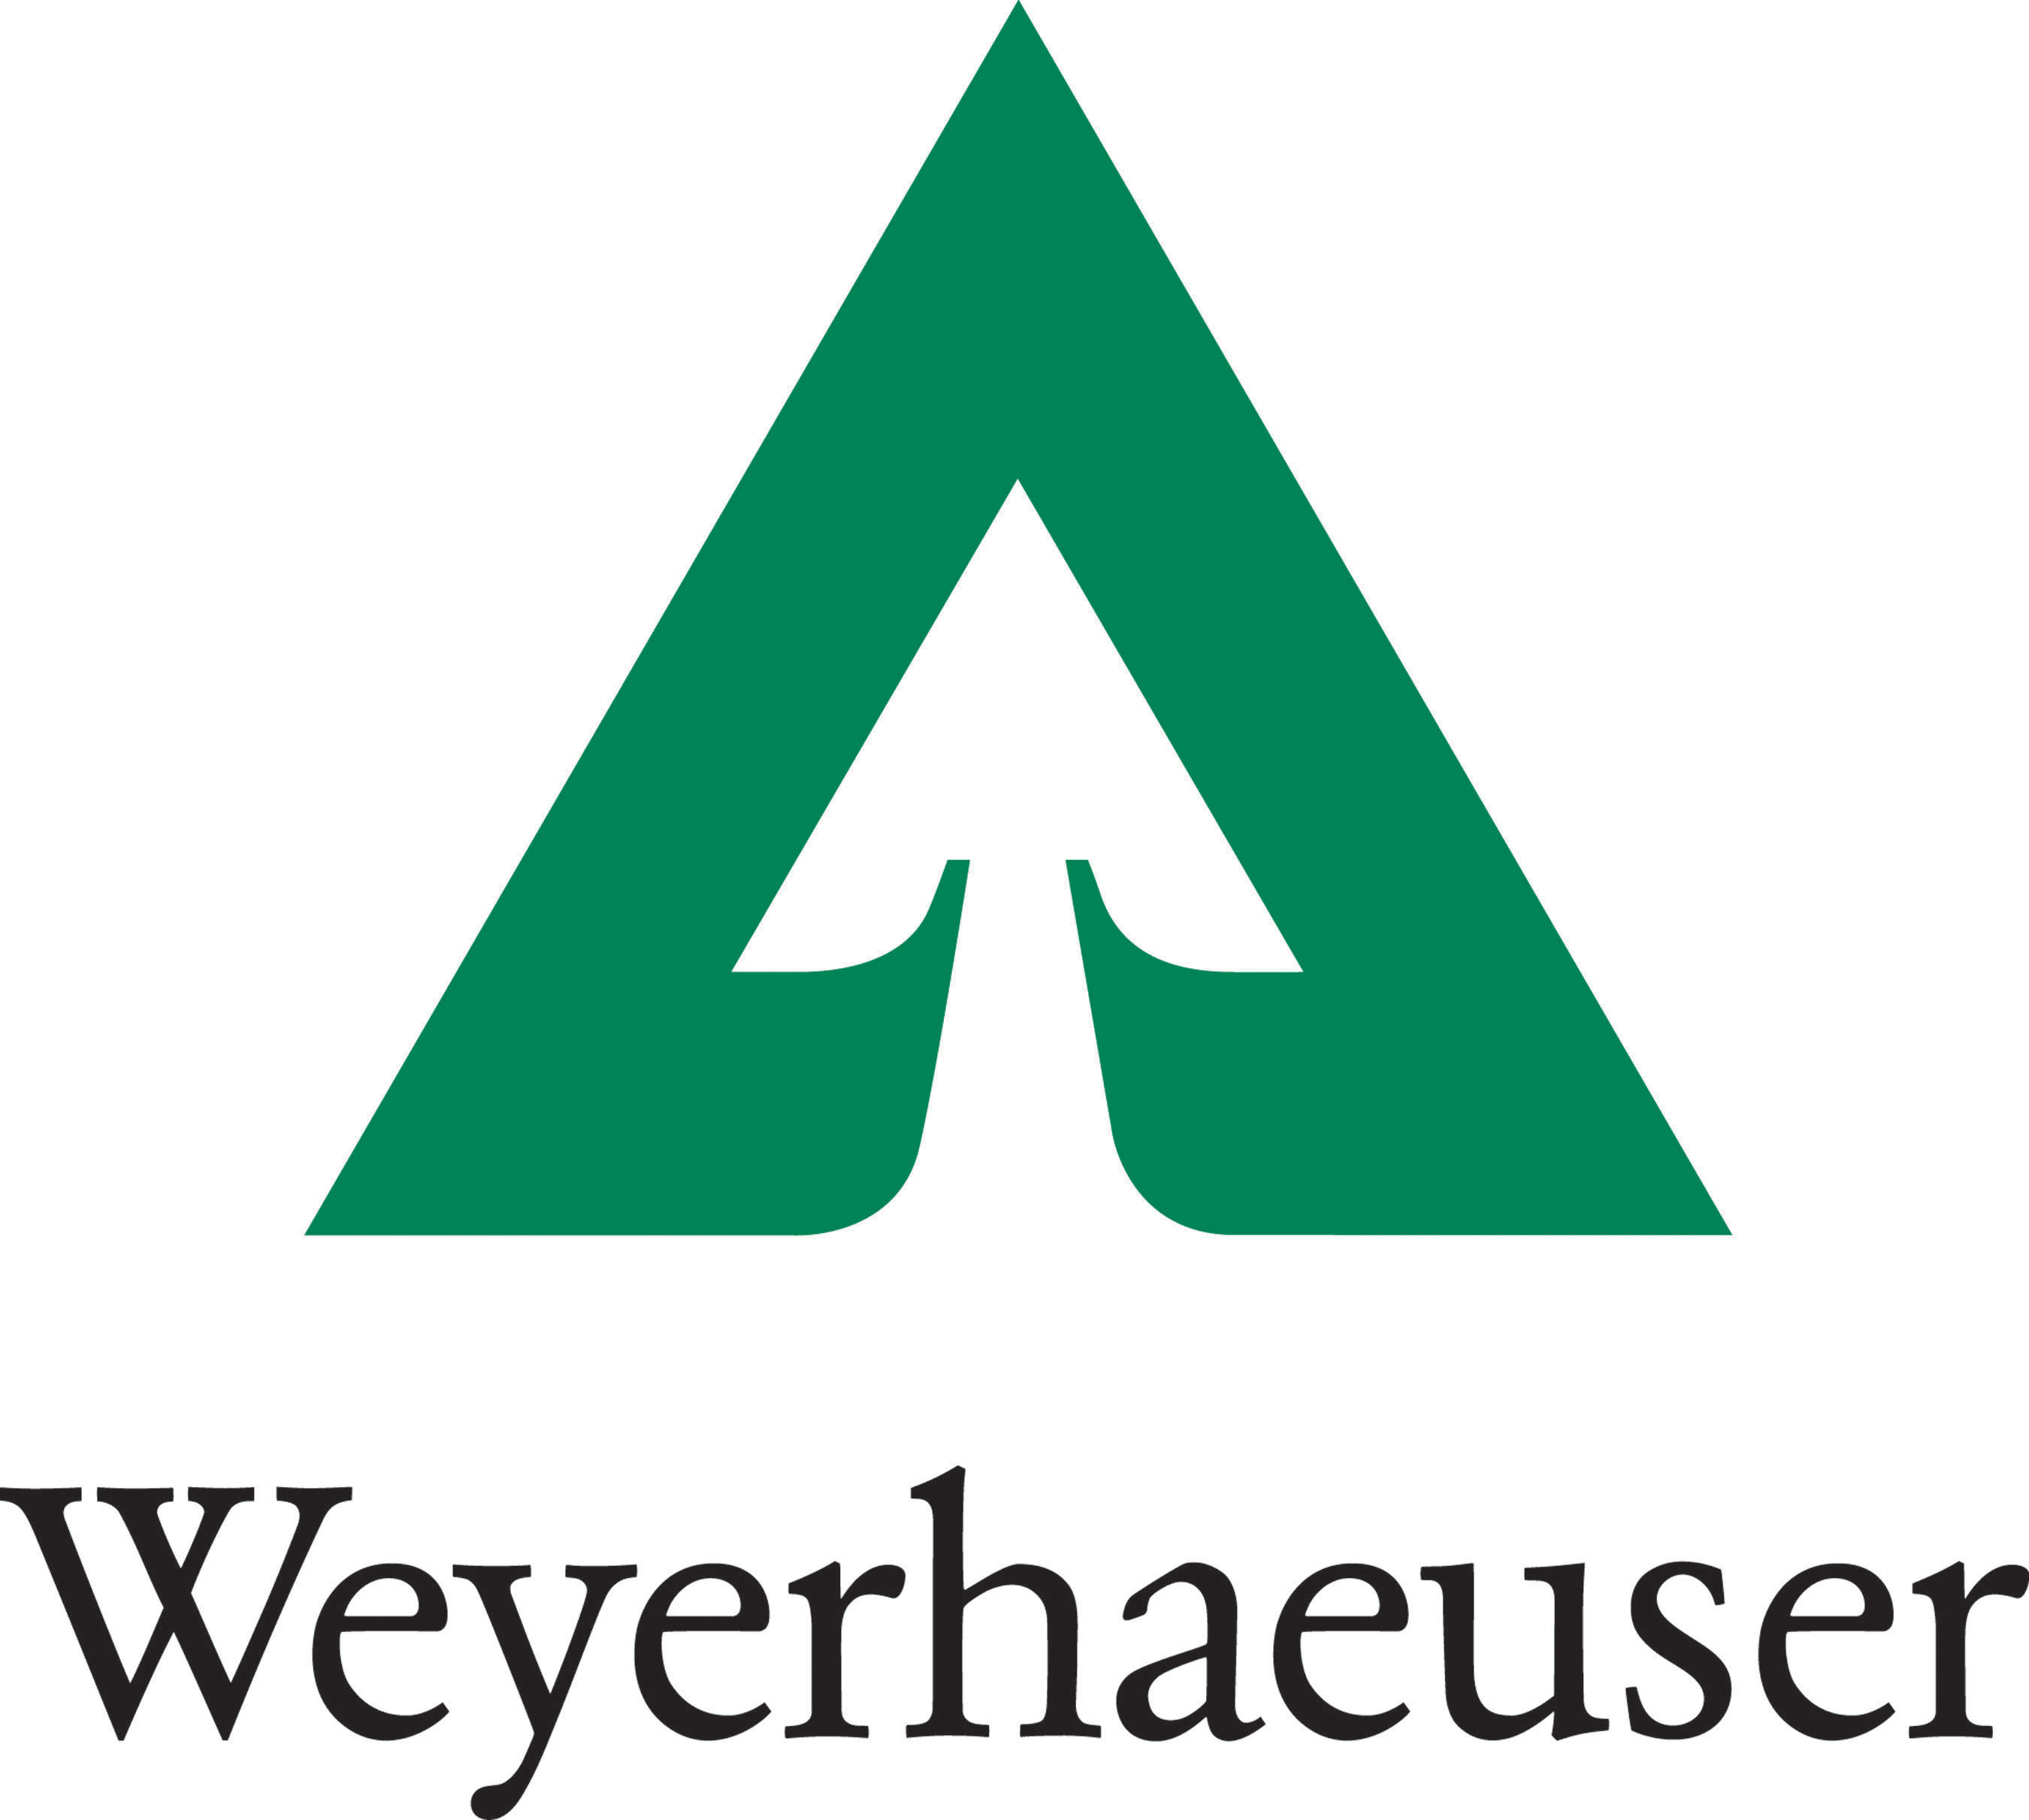 Weyerhaeuser Company logo.